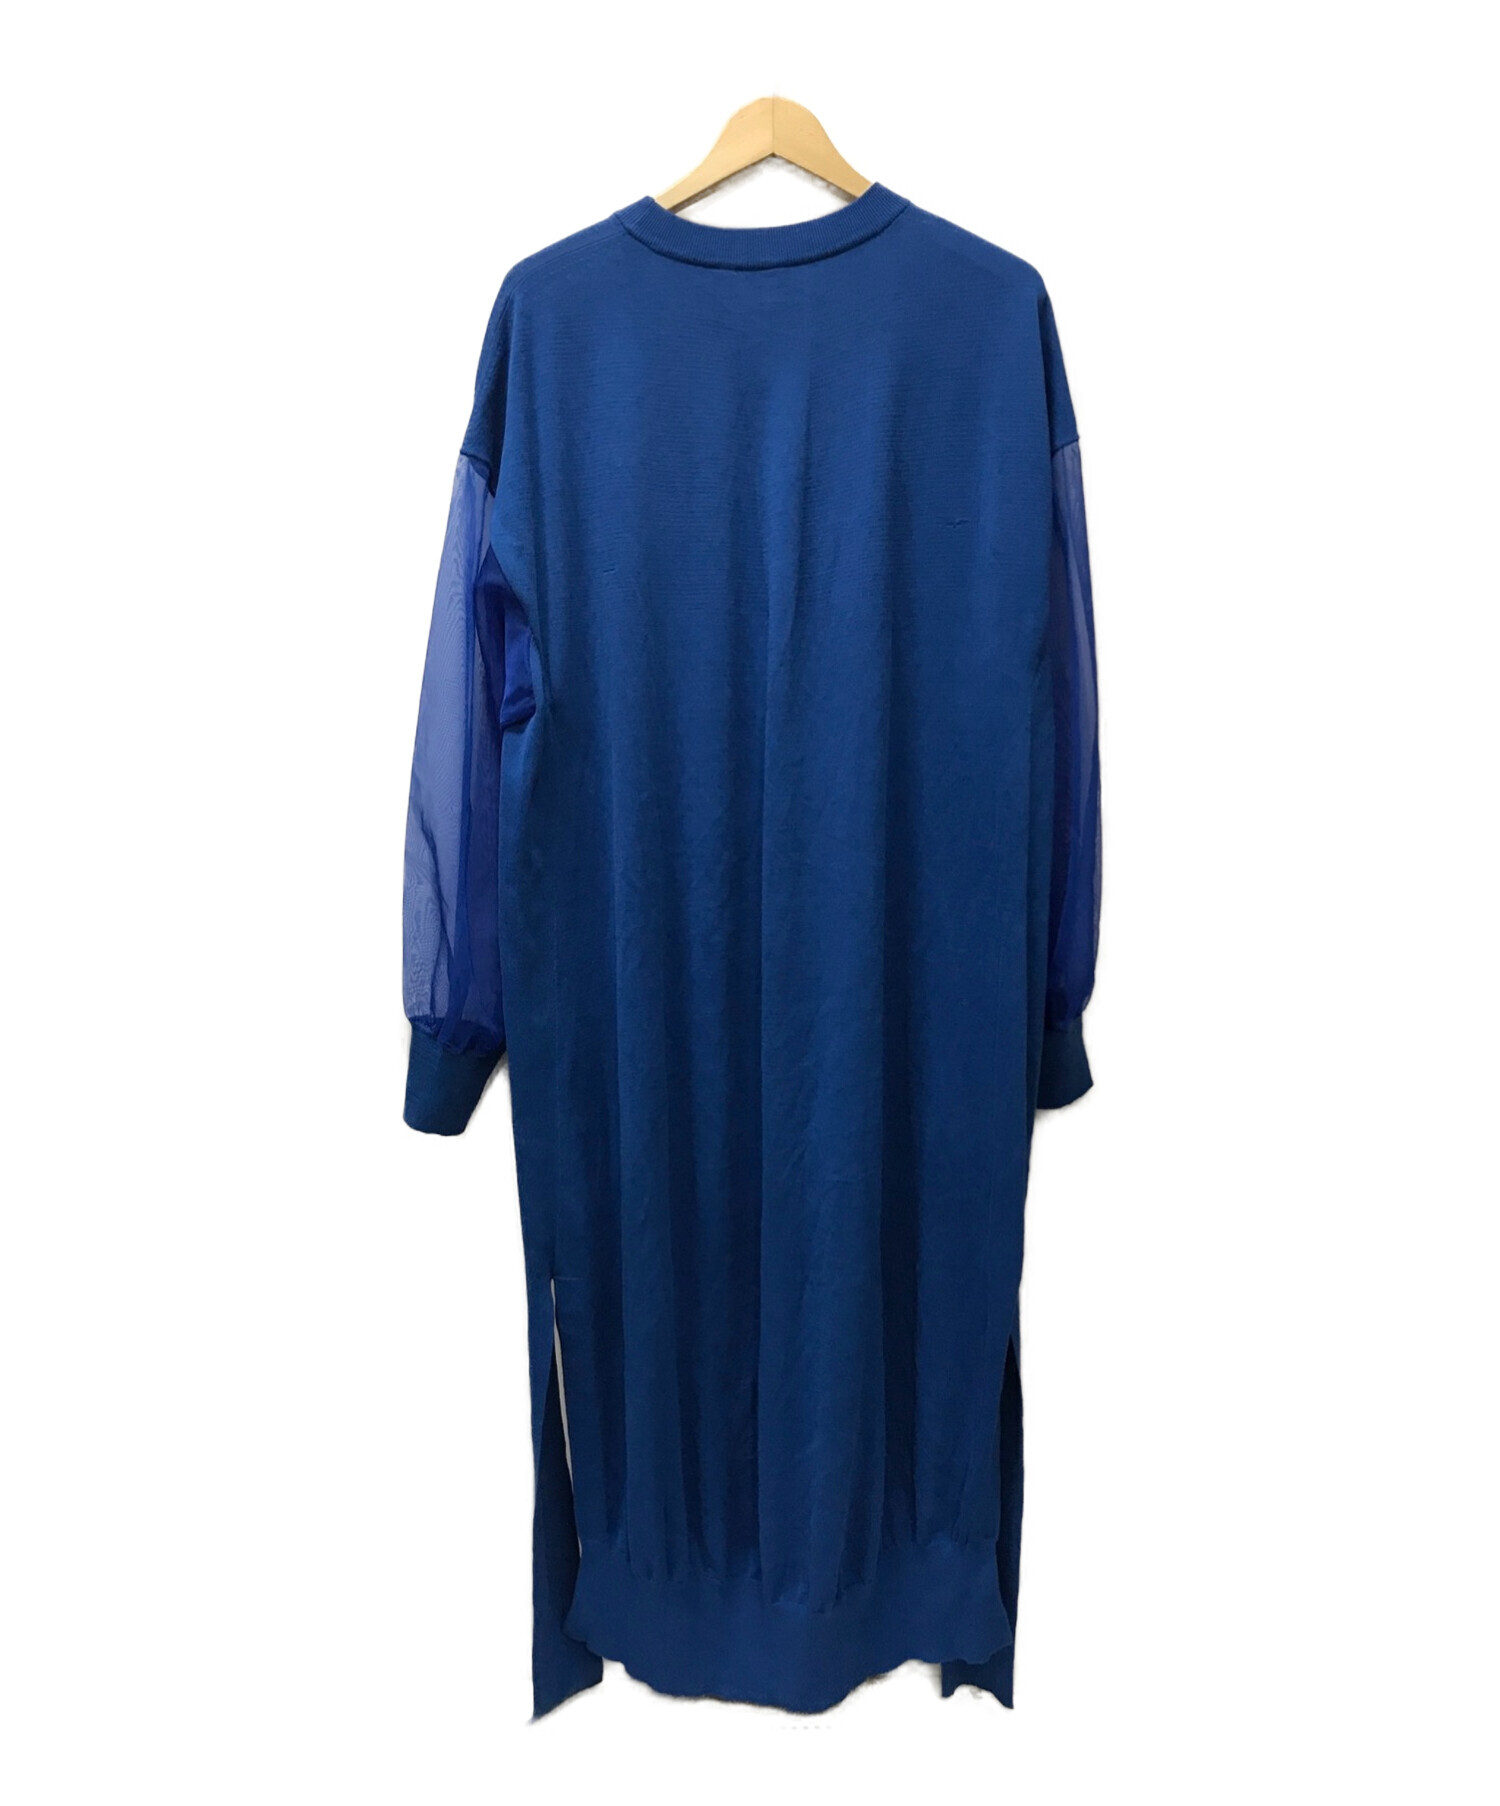 HYKE (ハイク) CREW NECK SWEATER DRESS WITH SHEER SLEEVES ブルー サイズ:2